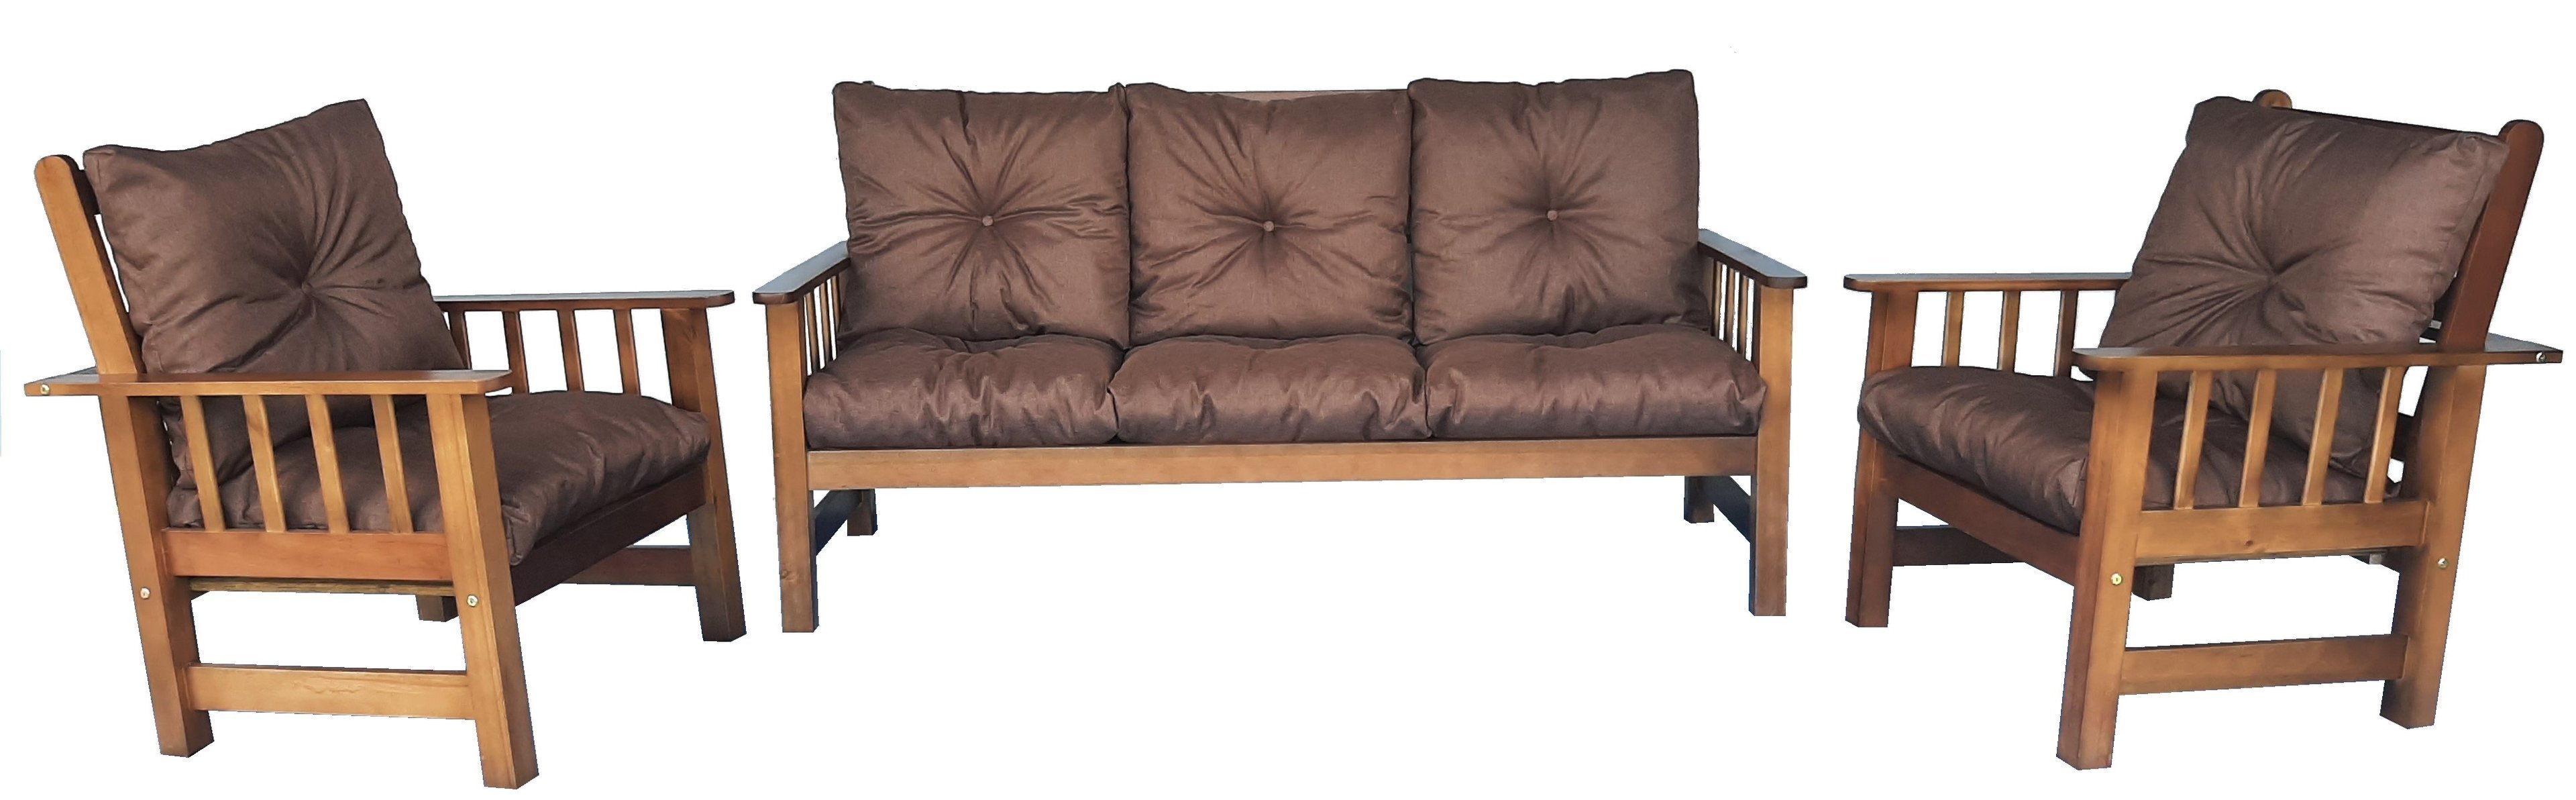 conjunto cancún sofá 3 lugares e poltronas de madeira estofado marrom